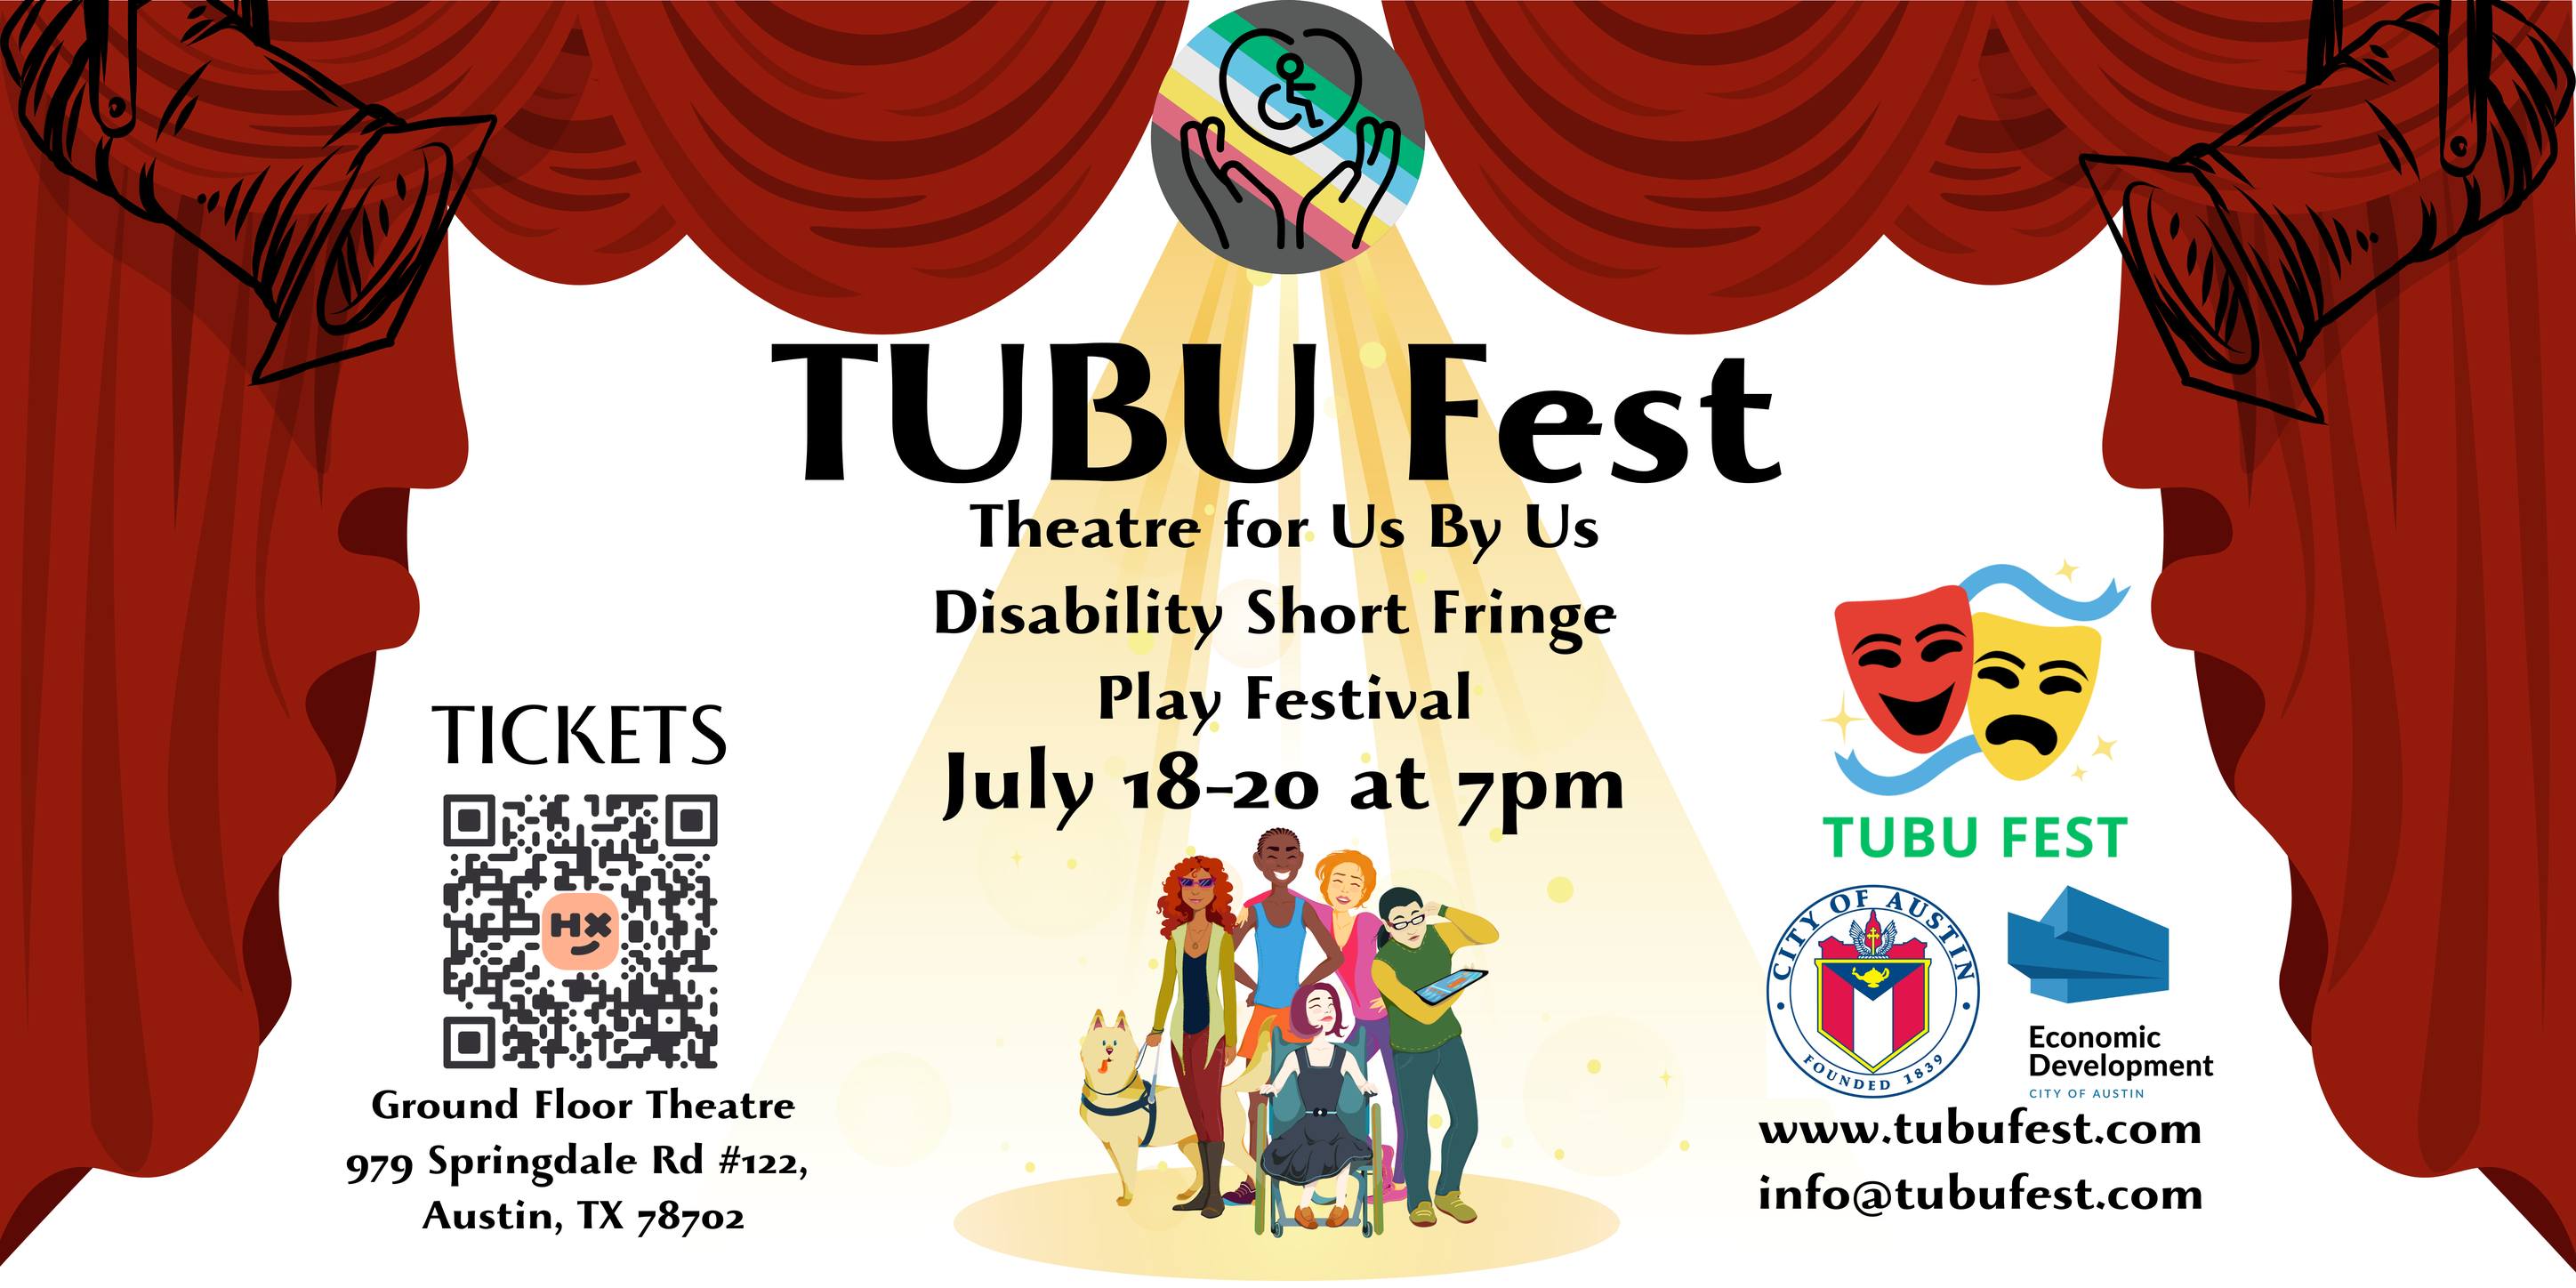 TUBU Fest - Theatre by Us by TUBU Fest